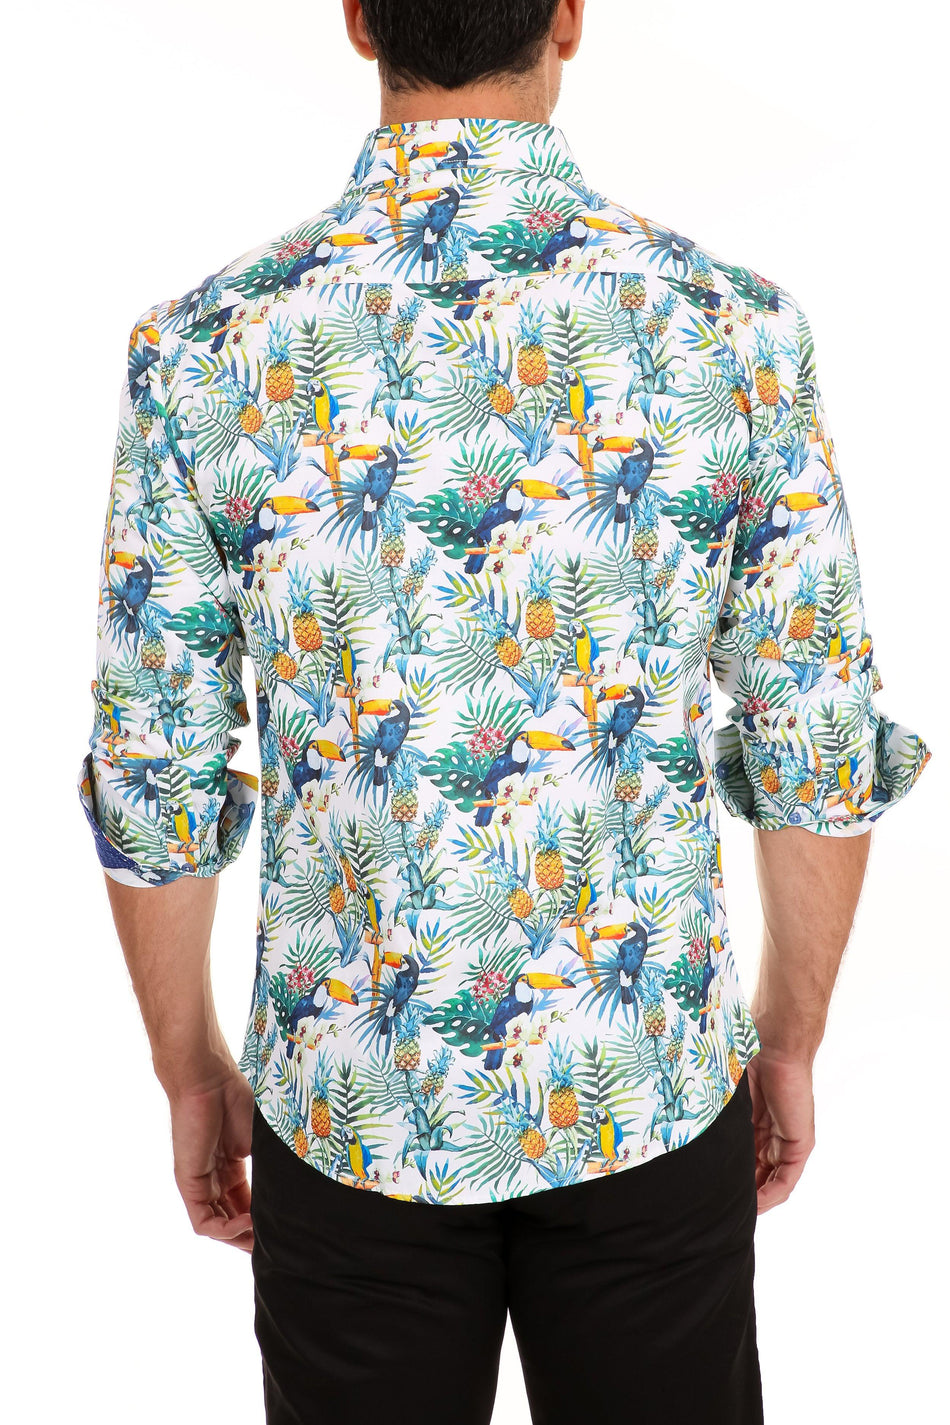 Men's Toucan and Pineapple Button Up Long Sleeve Dress Shirt